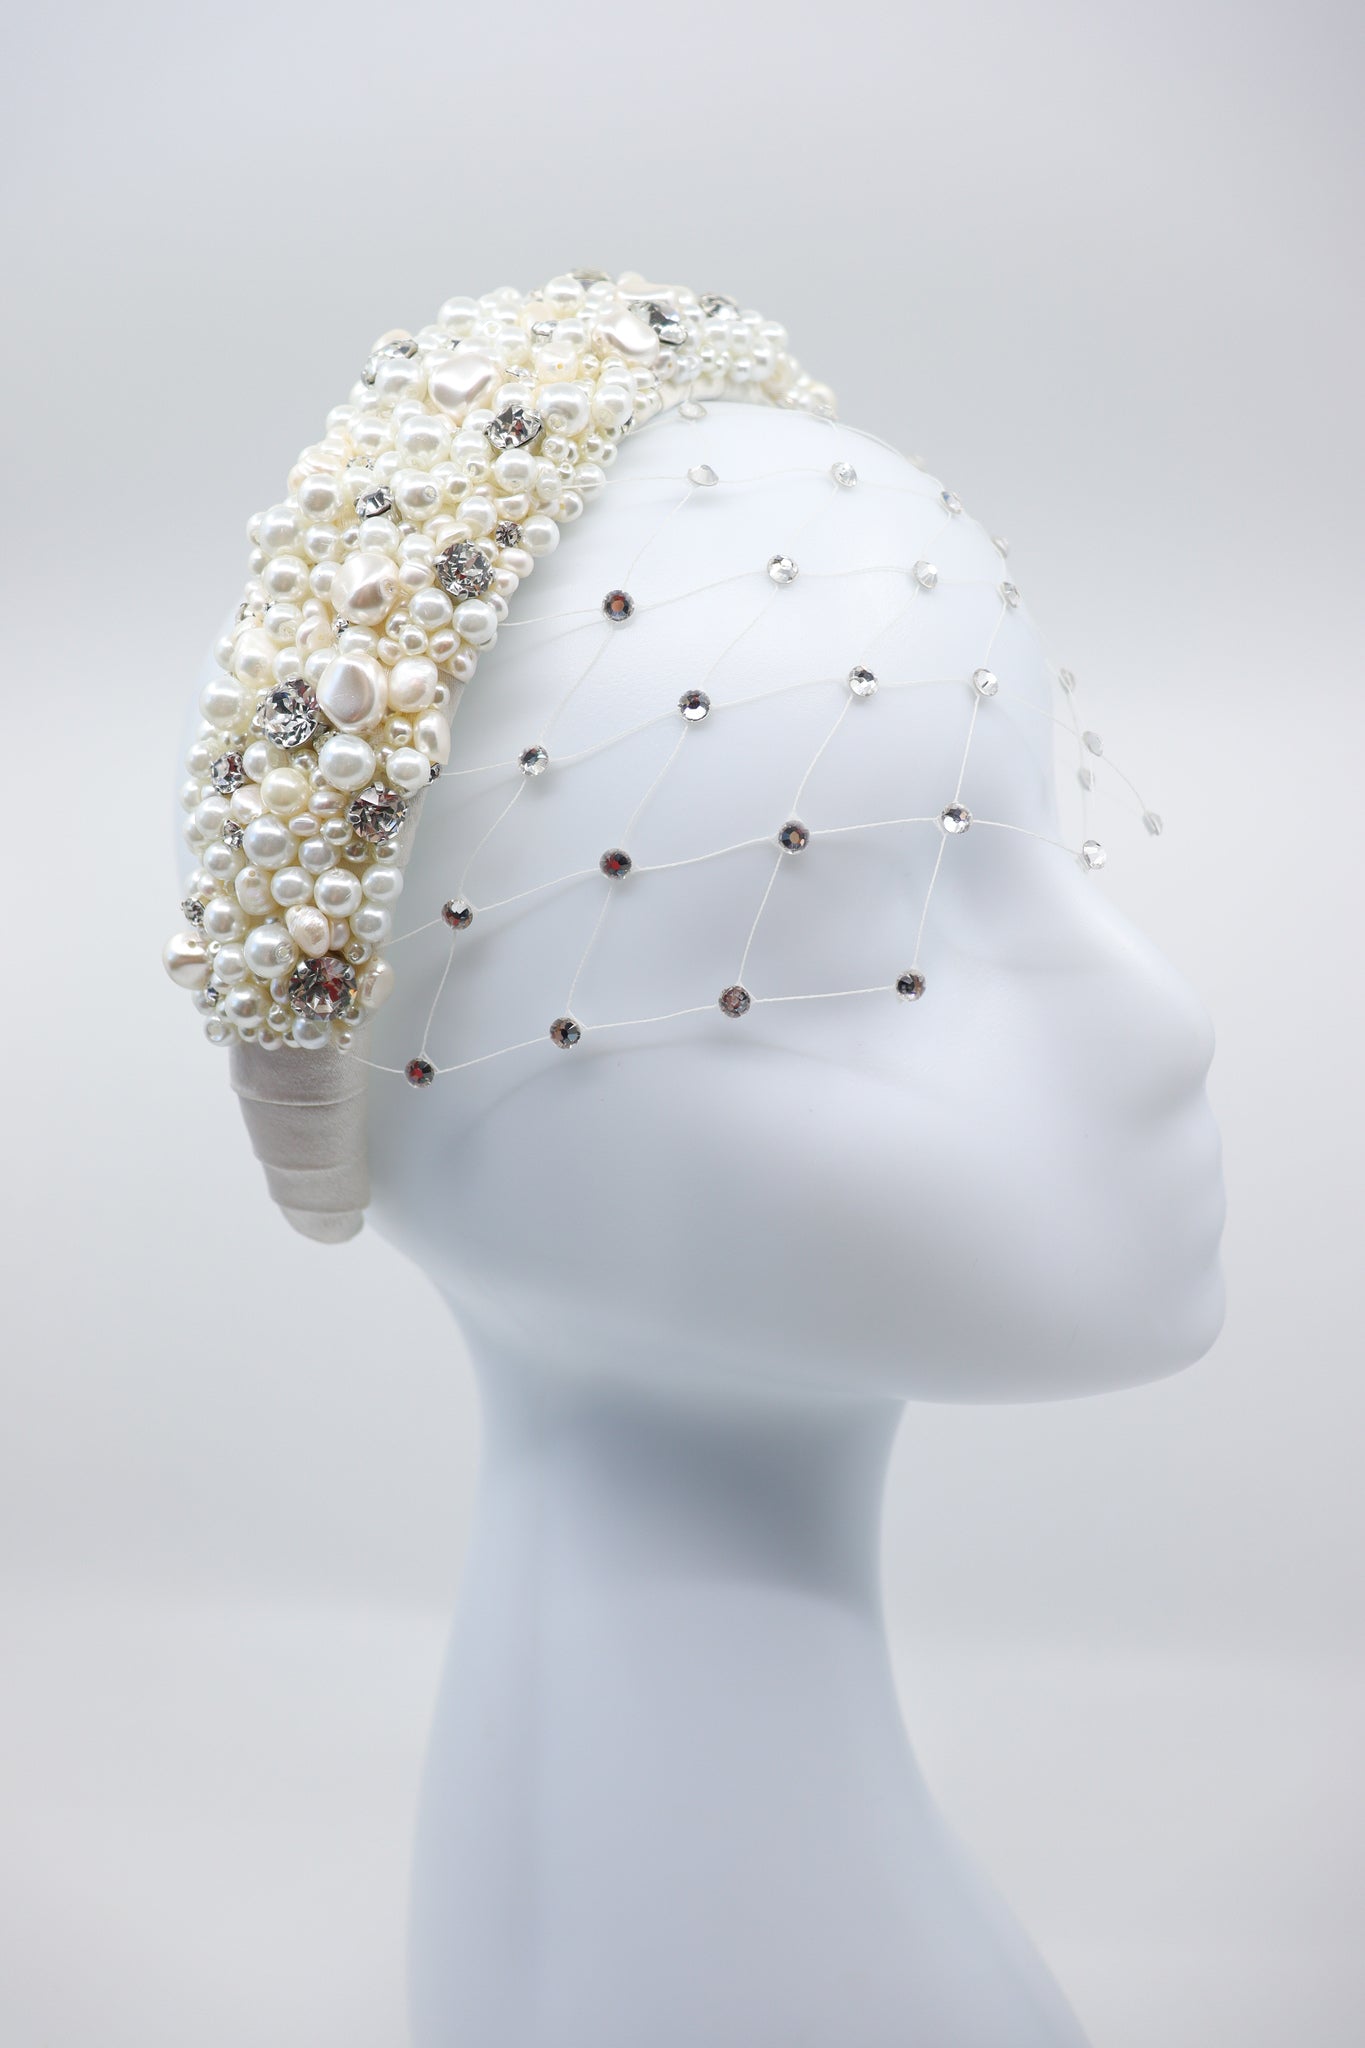 Luna Wedding Headpiece by Eva Oherjus Design- Handcrafted bridal accessory with freshwater pearls, Swarovski crystals, and Italian silk. Perfect for elegant weddings.